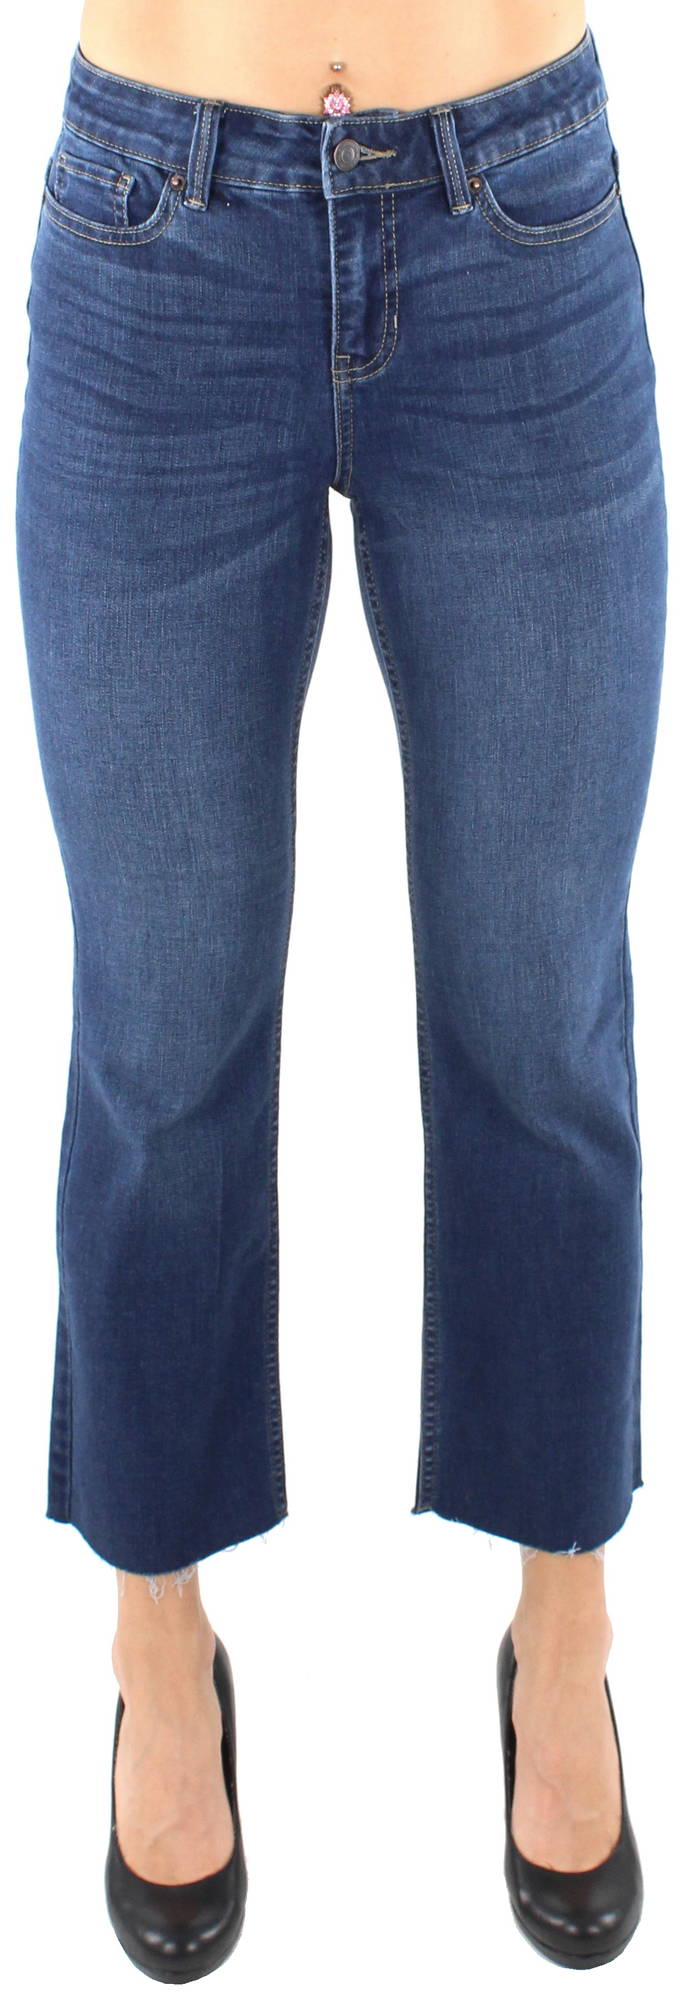 Vero Moda Jeans Tailor ankle cr302, Blue - Stilettoshop.eu webstore